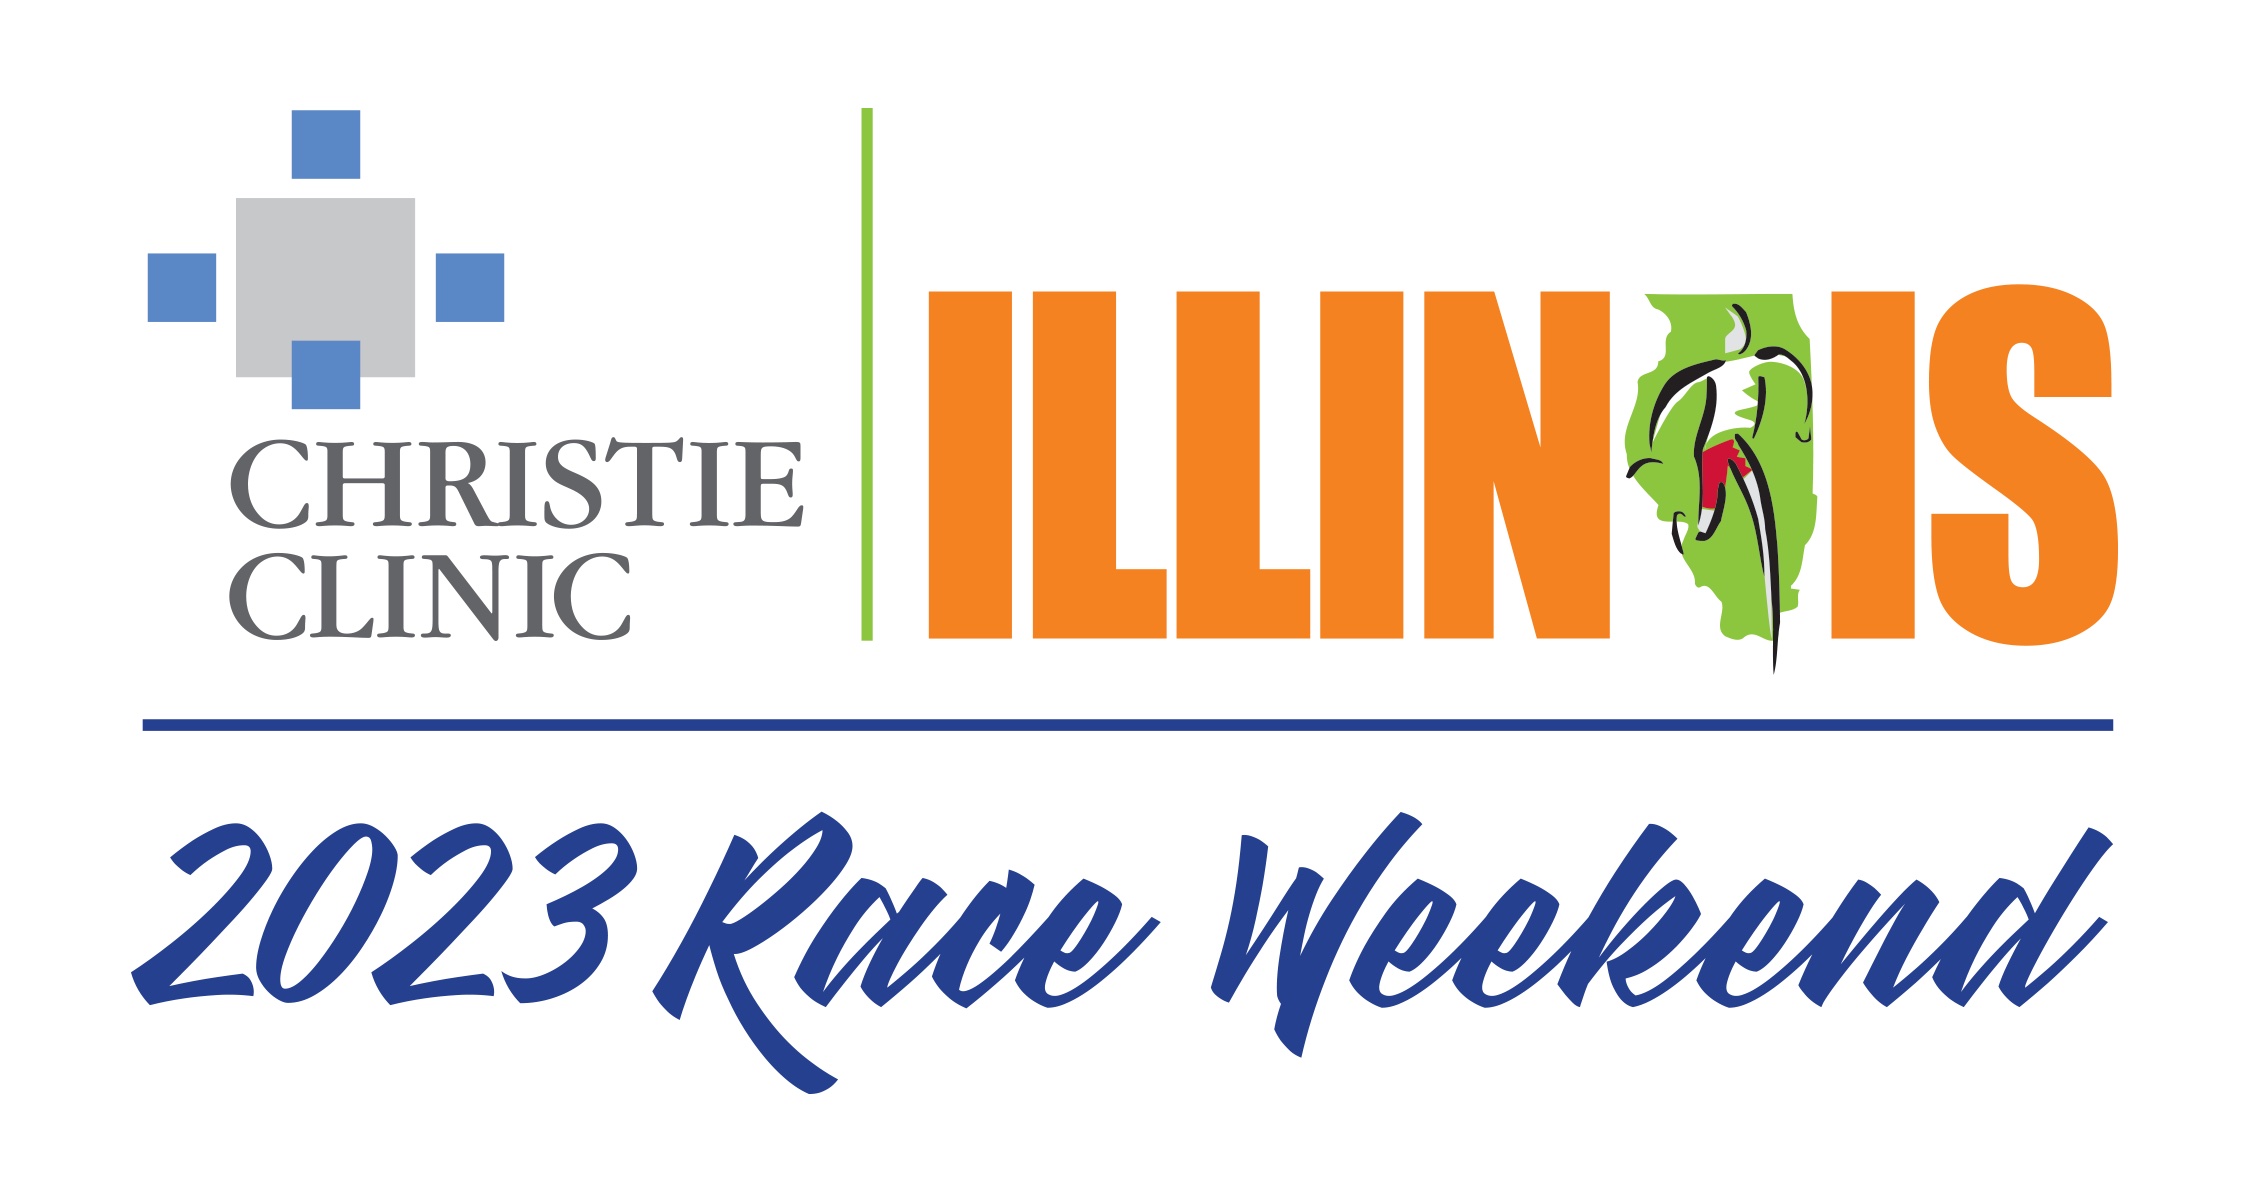 Christie Clinic Illinois Marathon logo on RaceRaves